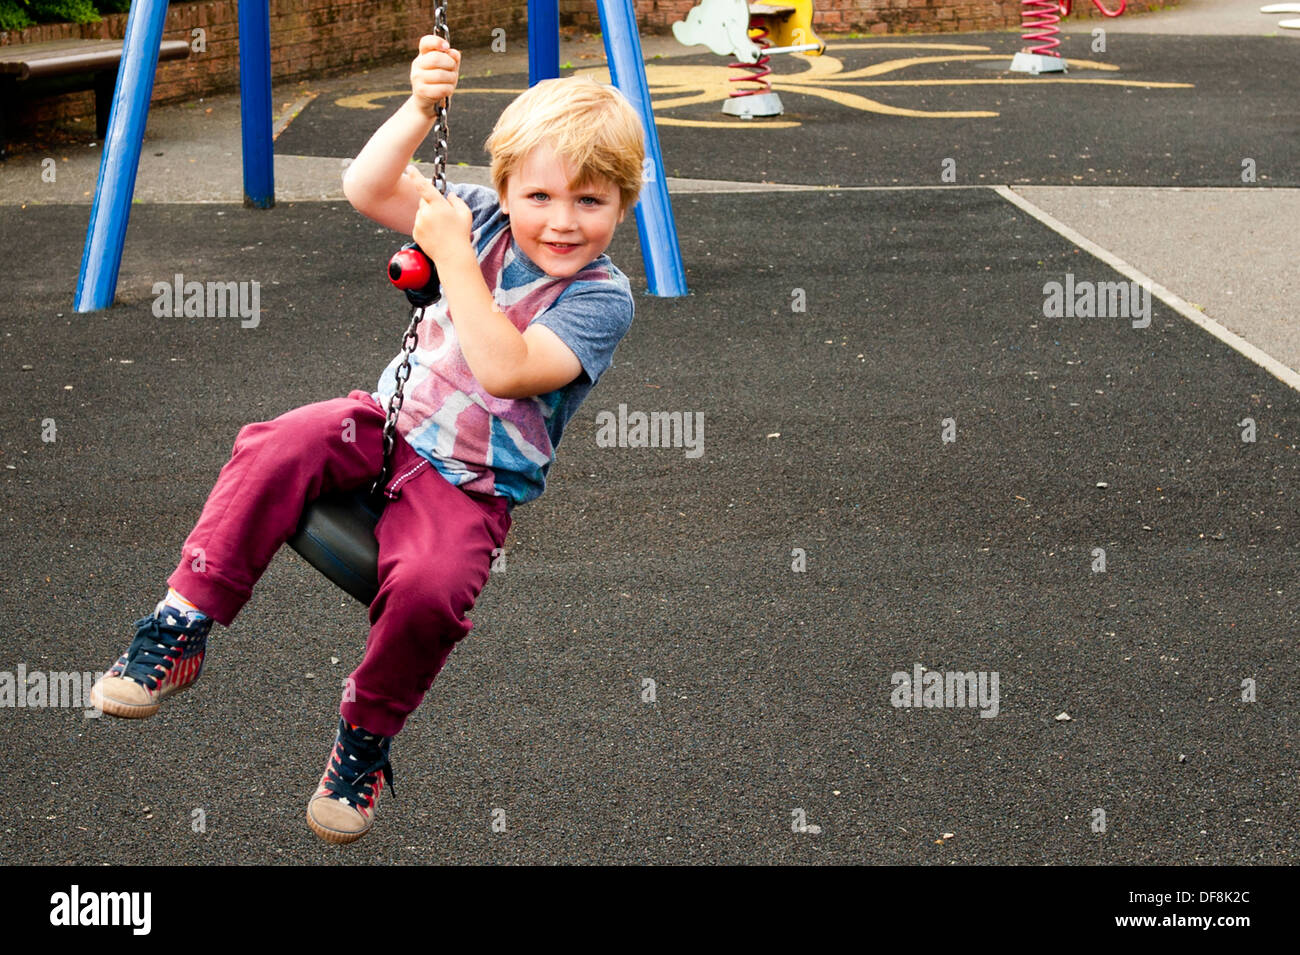 boy at play park having fun sitting on death slide wearing union flag t shirt Stock Photo